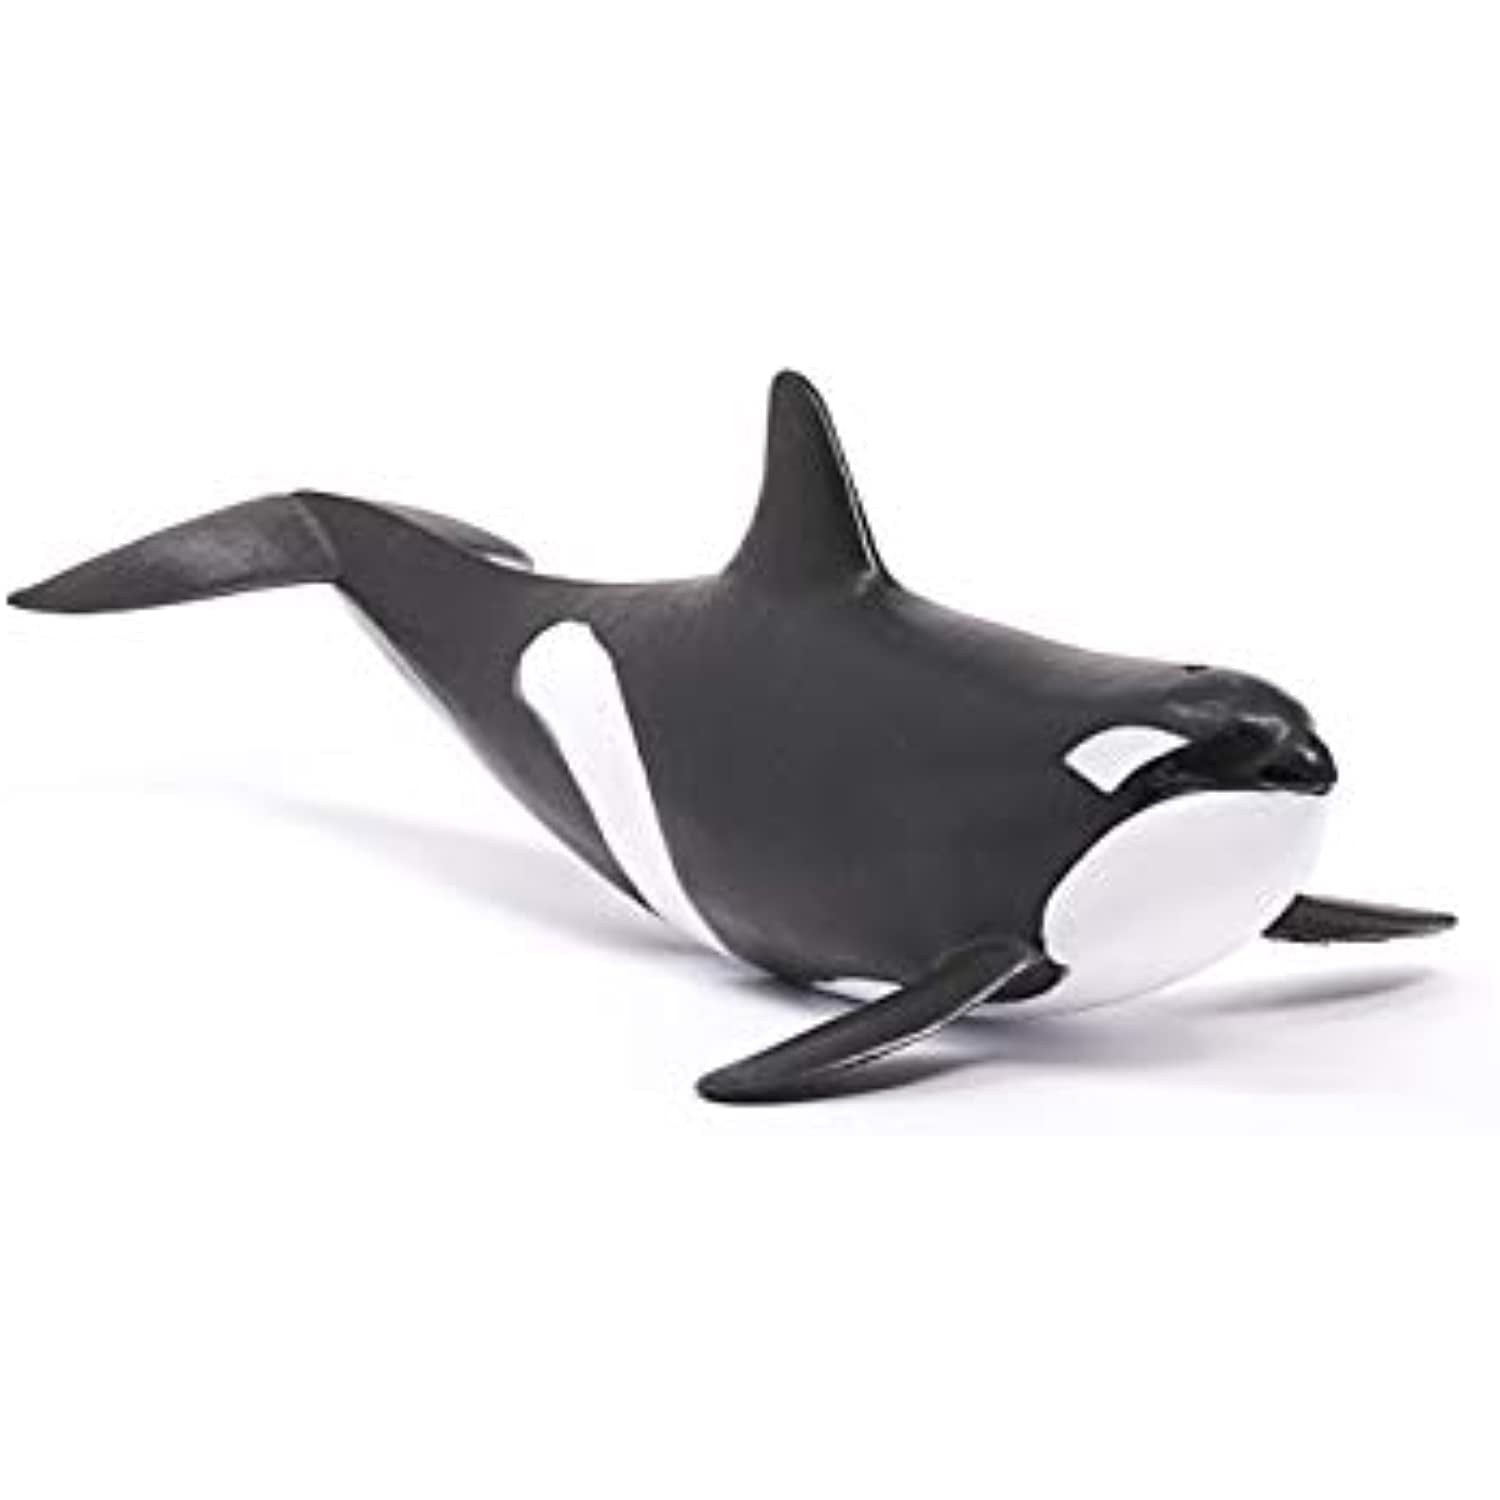 14807 Schleich Killer Whale Plastic Figure Wild Life 